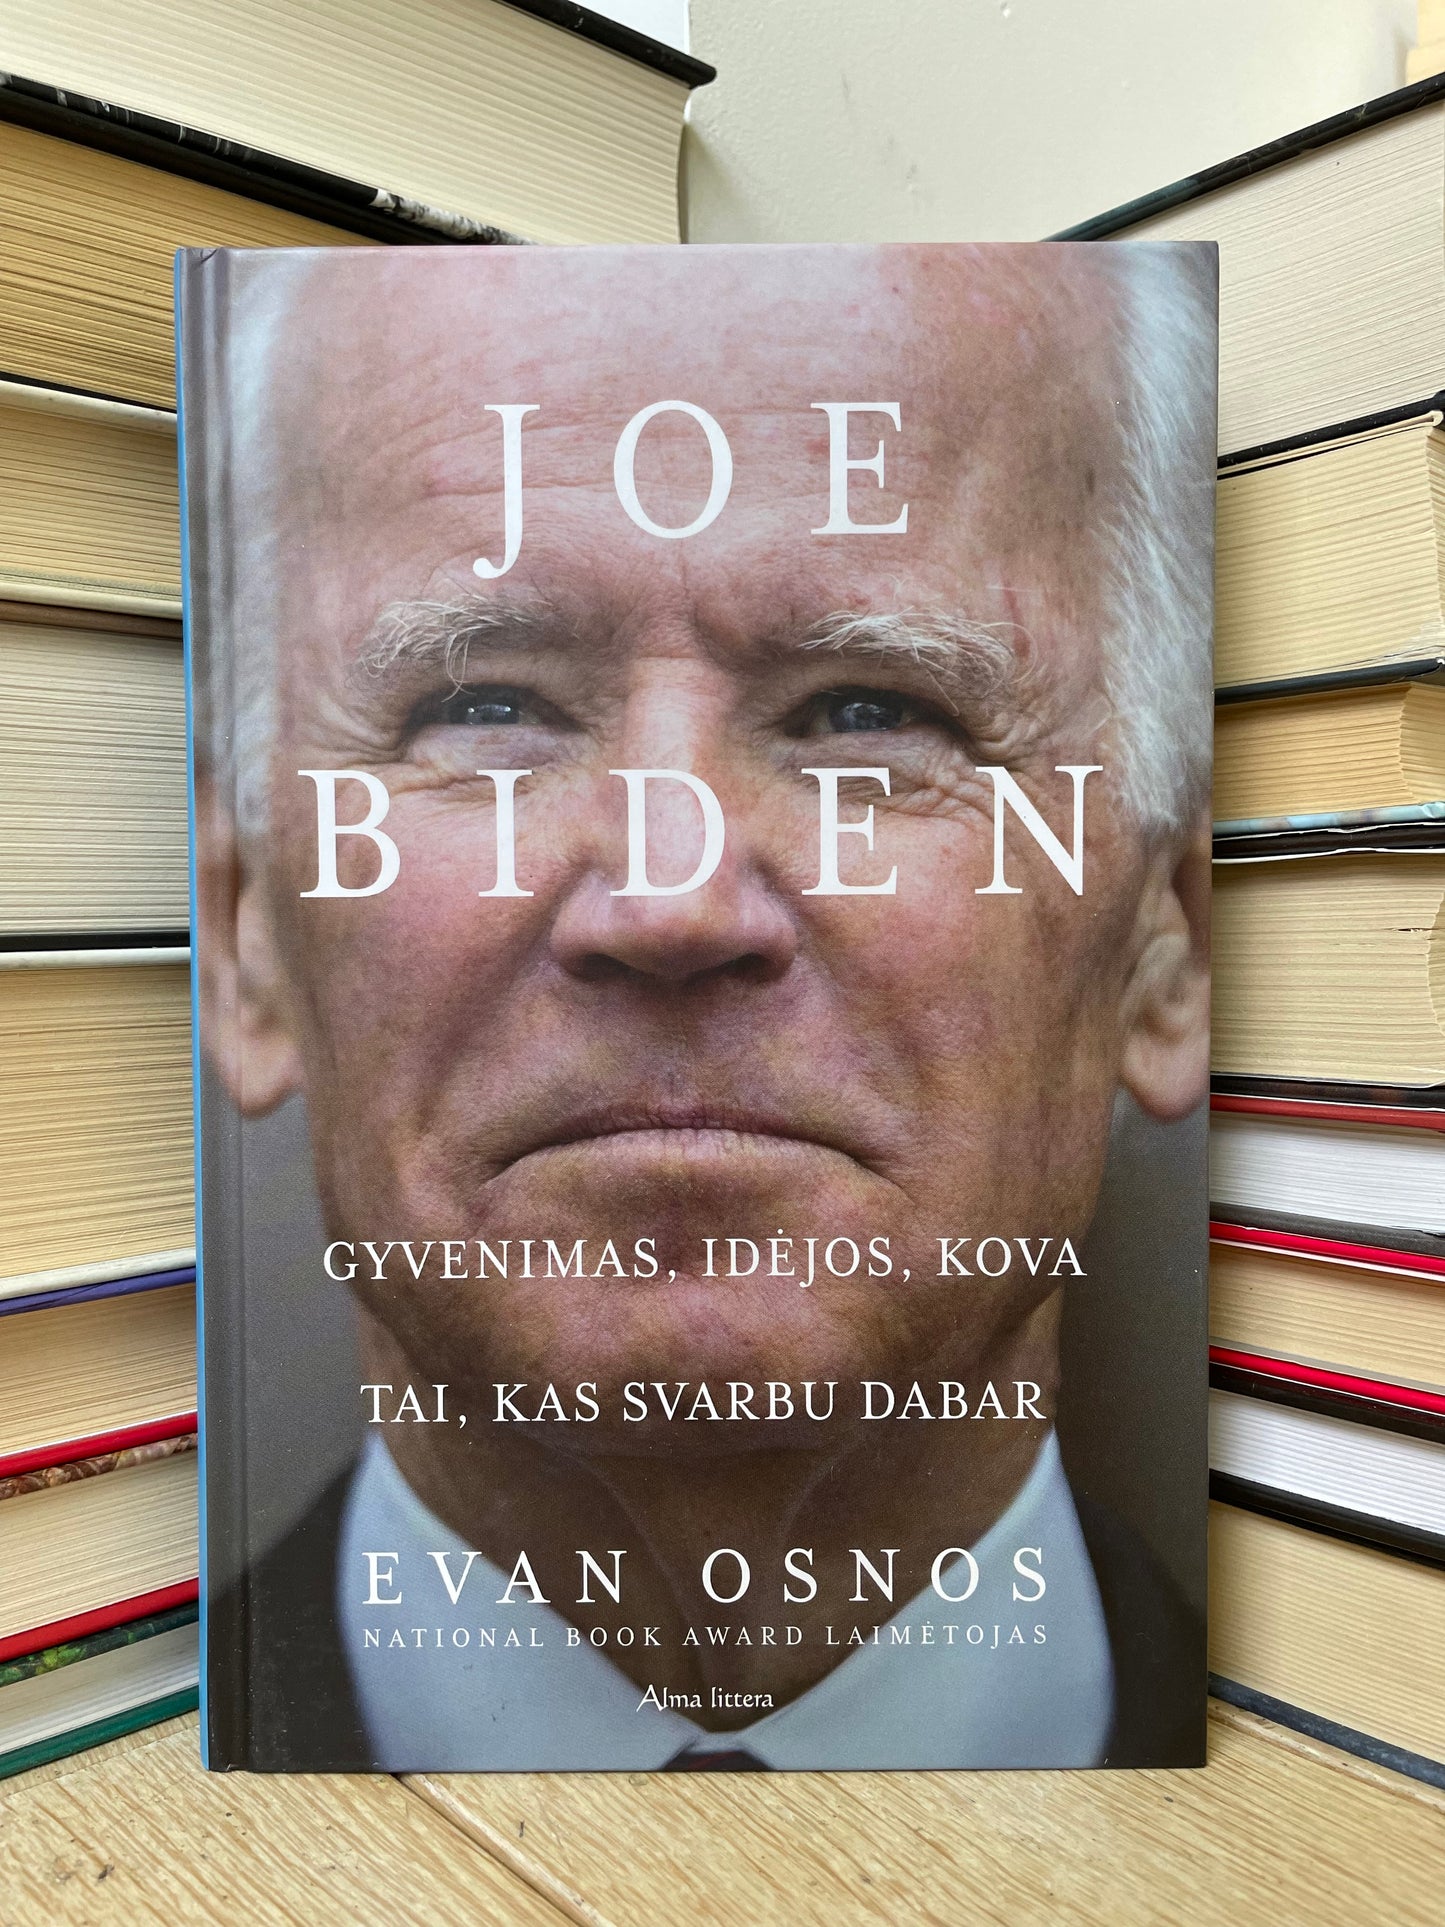 Evan Osnos - ,,Joe Biden: gyvenimas, idėjos, kova"